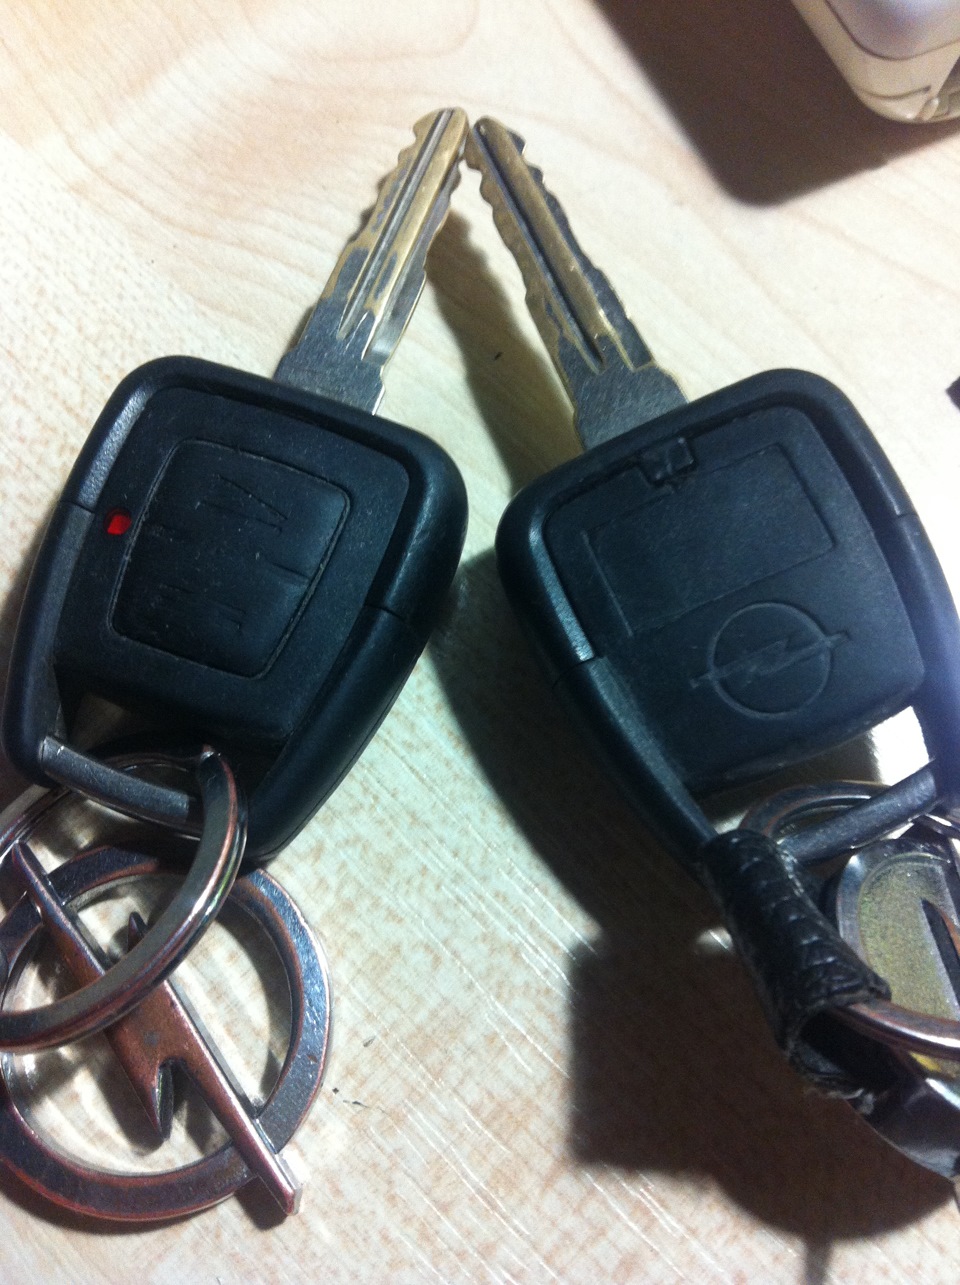 Ключи опель вектра б. Ключ Opel Vectra b 1999. Ключ Опель Вектра б 1999. Ключ зажигания Opel Frontera. Чип ключа Опель Вектра с.